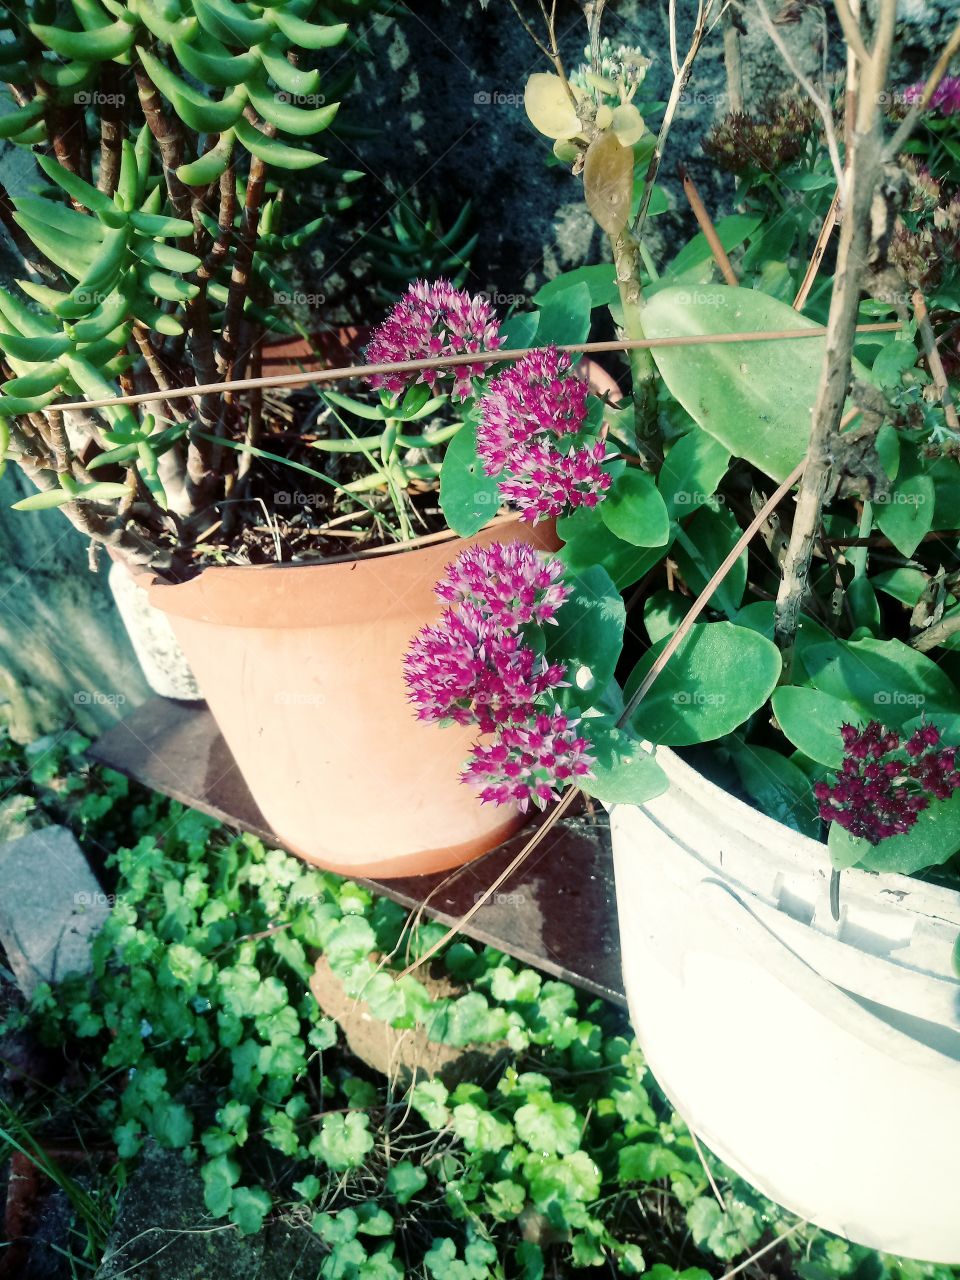 small lil purple flowers